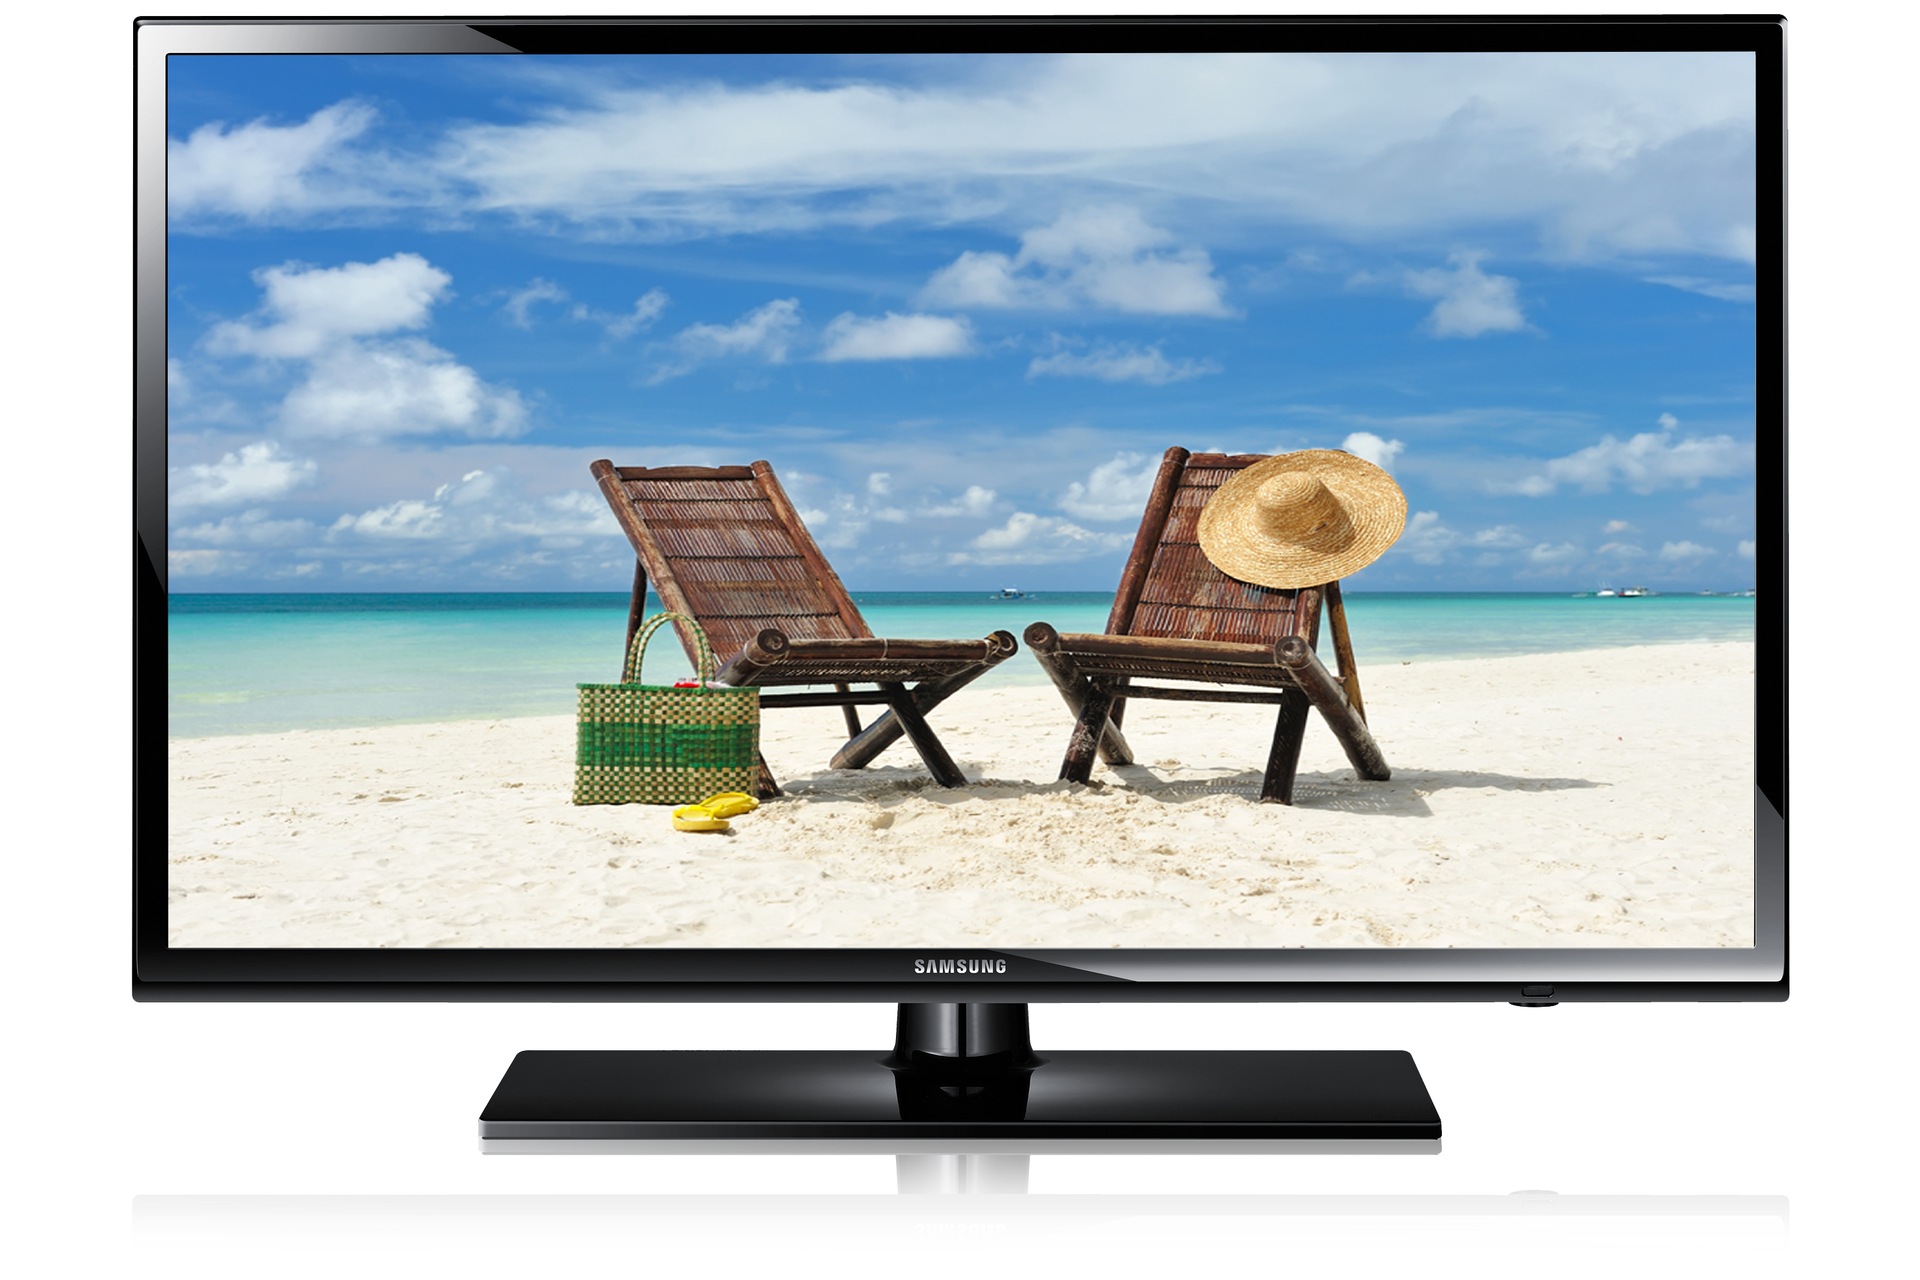 Samsung 39 Class HDTV (1080p) LED-LCD TV (UN39EH5003F)